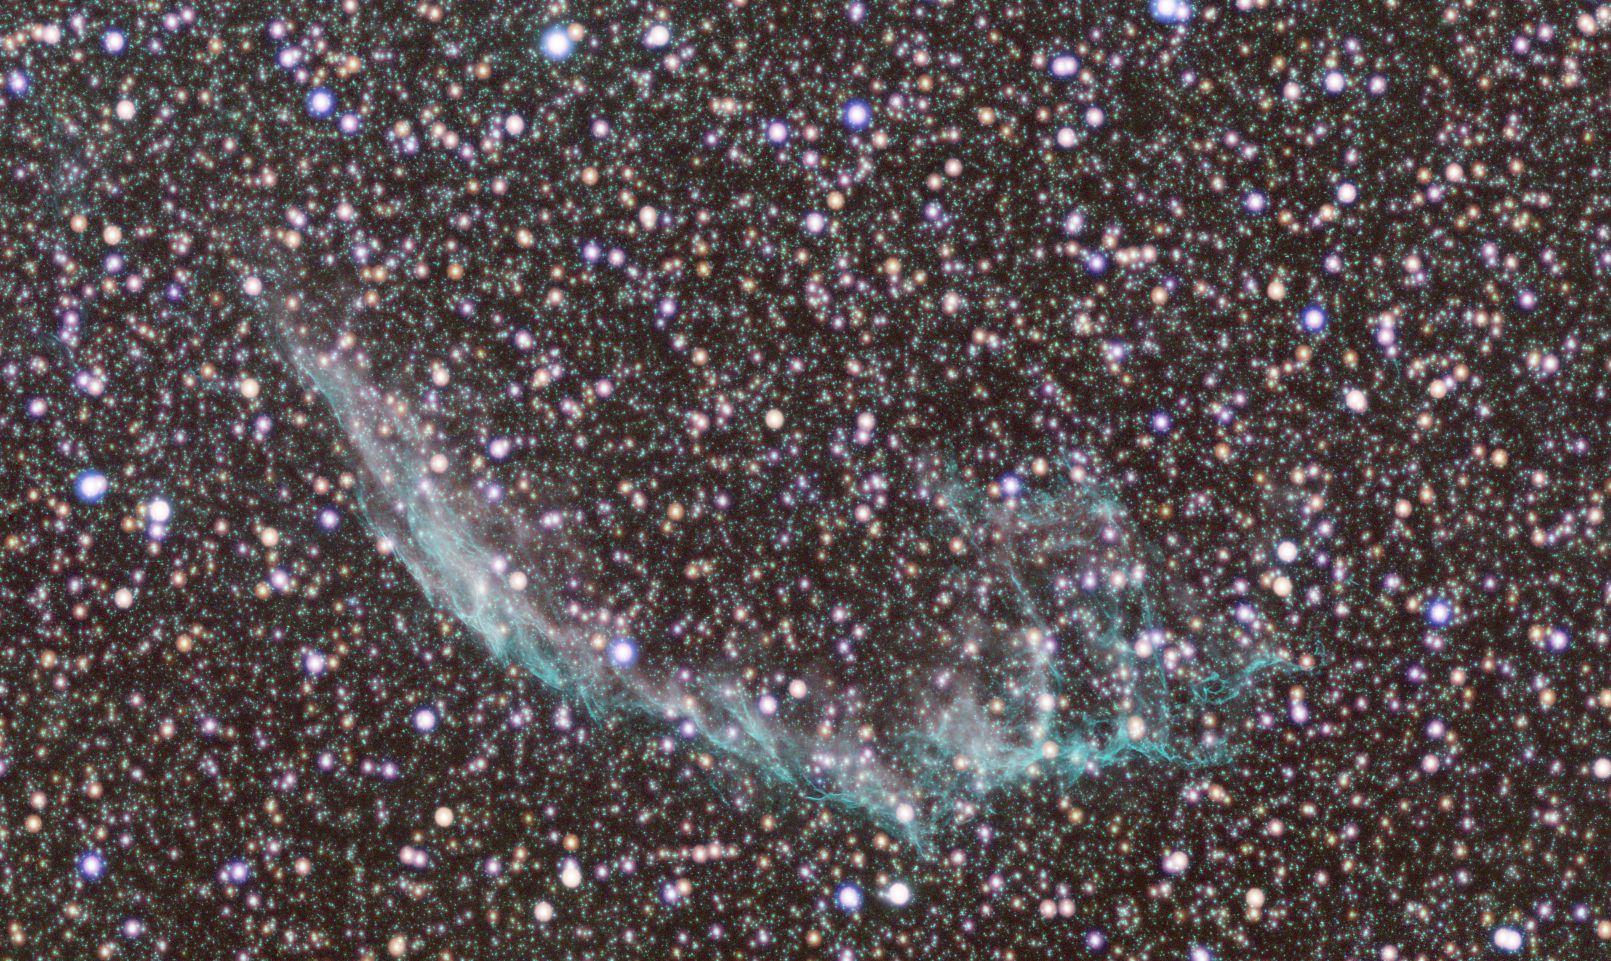 Eastern Veil nebula